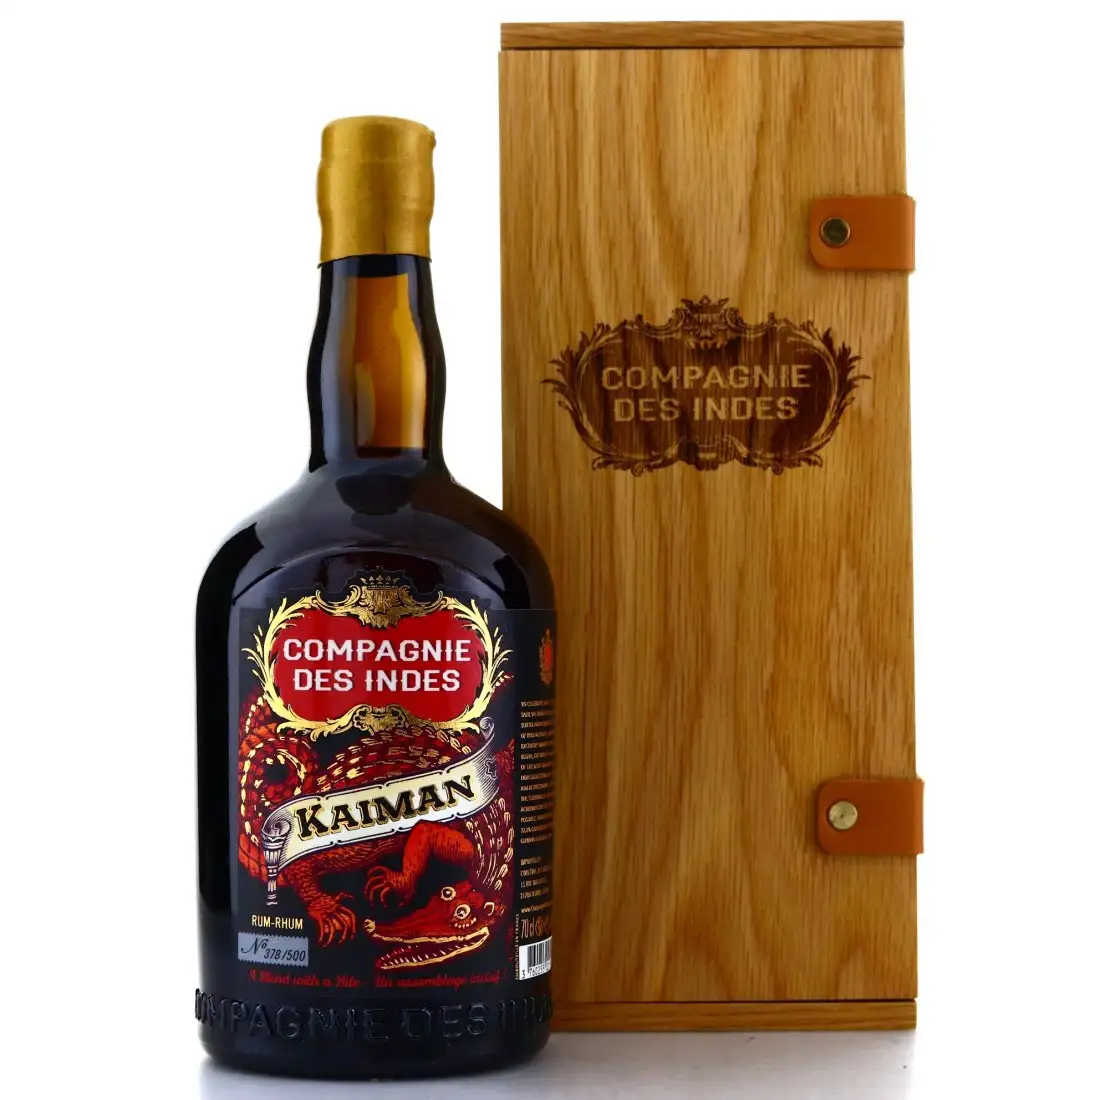 Rare 46-Year Kaiman Rum Rated RumX - 8.2 RX743 Buy 